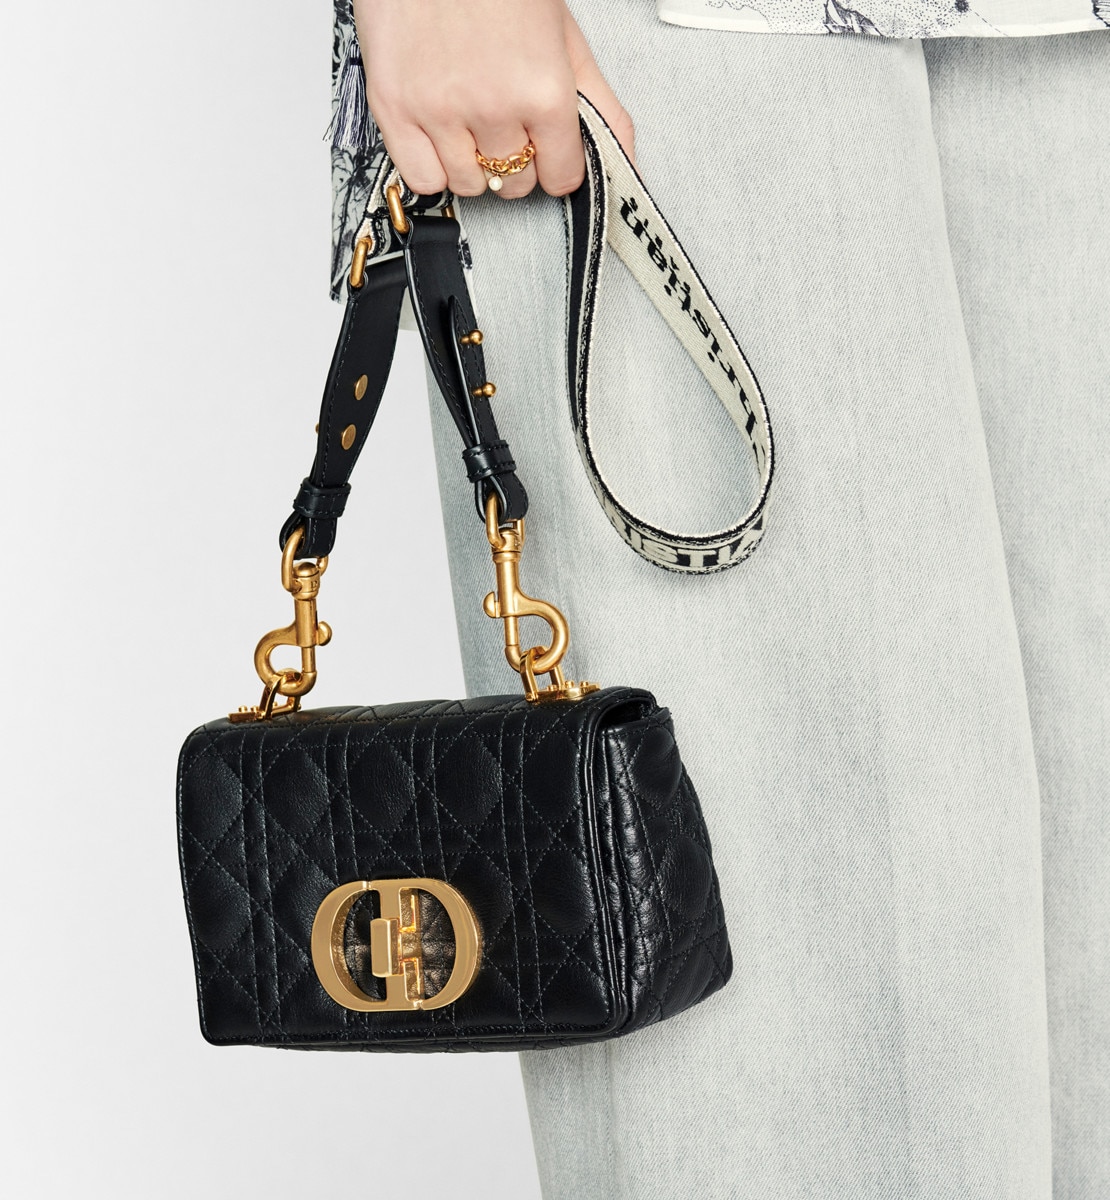 Meet the New Dior Caro Bag - PurseBop